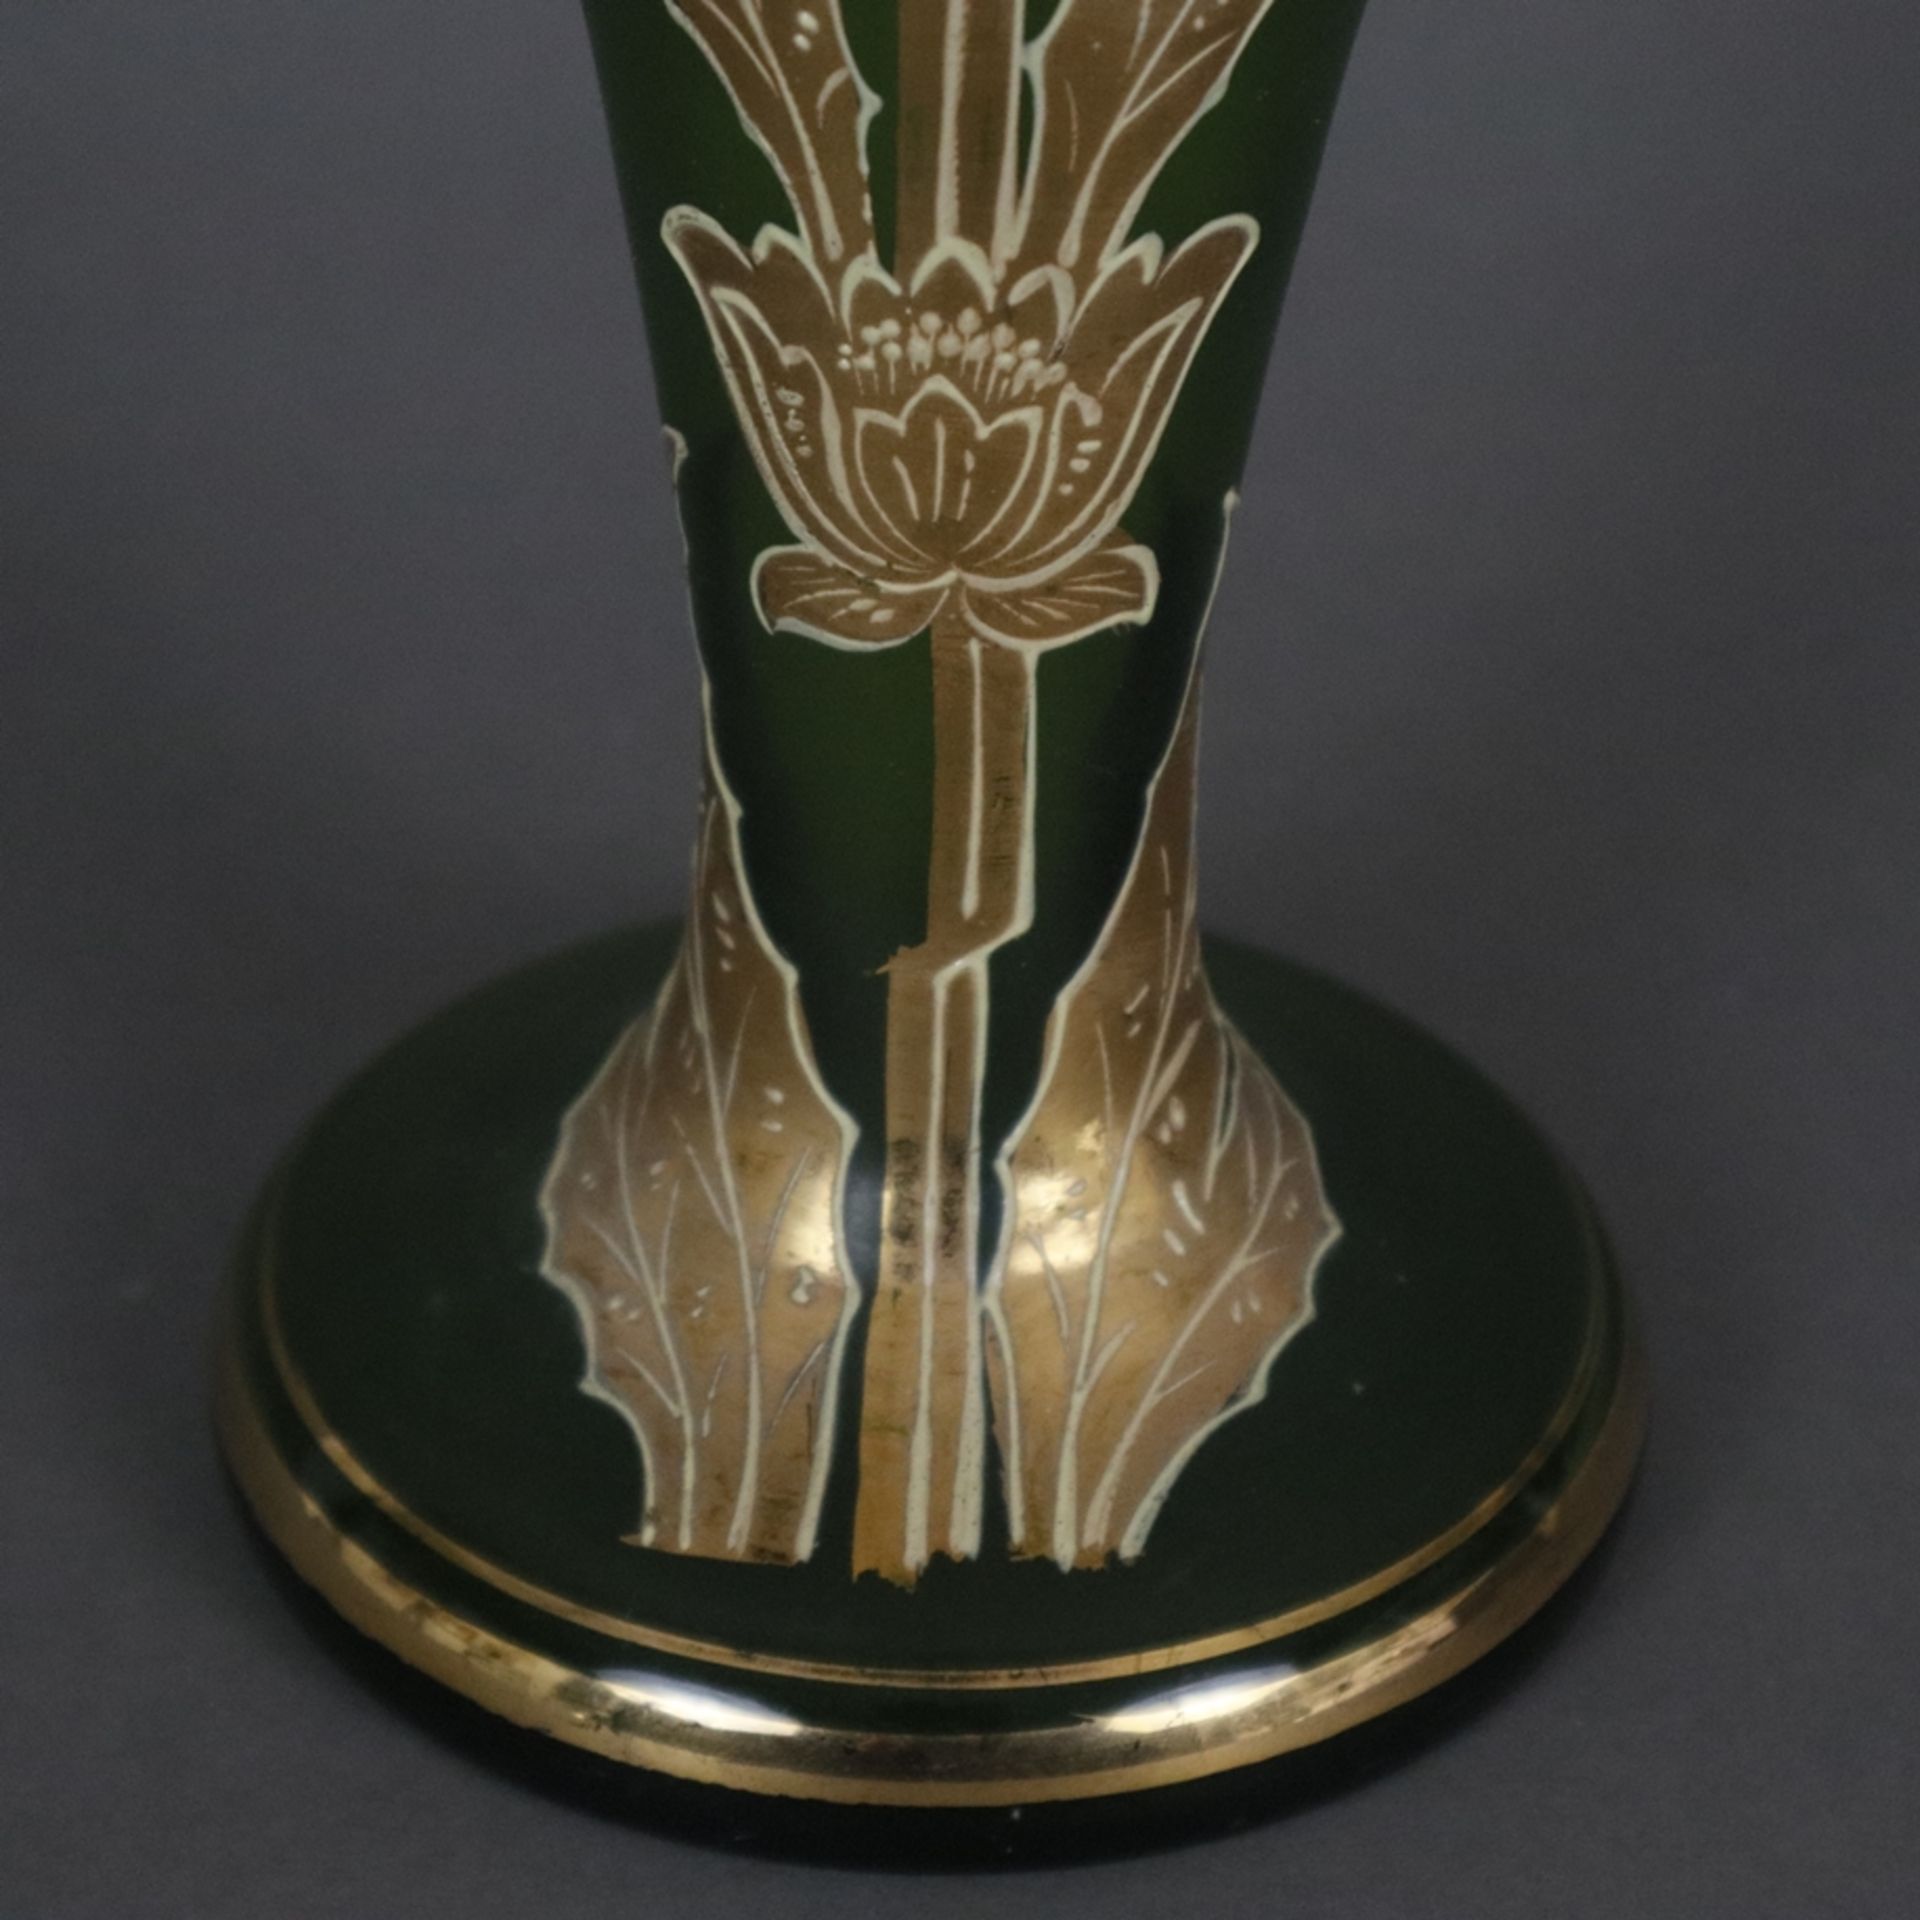 Jugendstil-Glasvase mit Metallmontur - wohl Frankreich um 1900, Klarglas mit grünem Unterfang, scha - Image 6 of 8